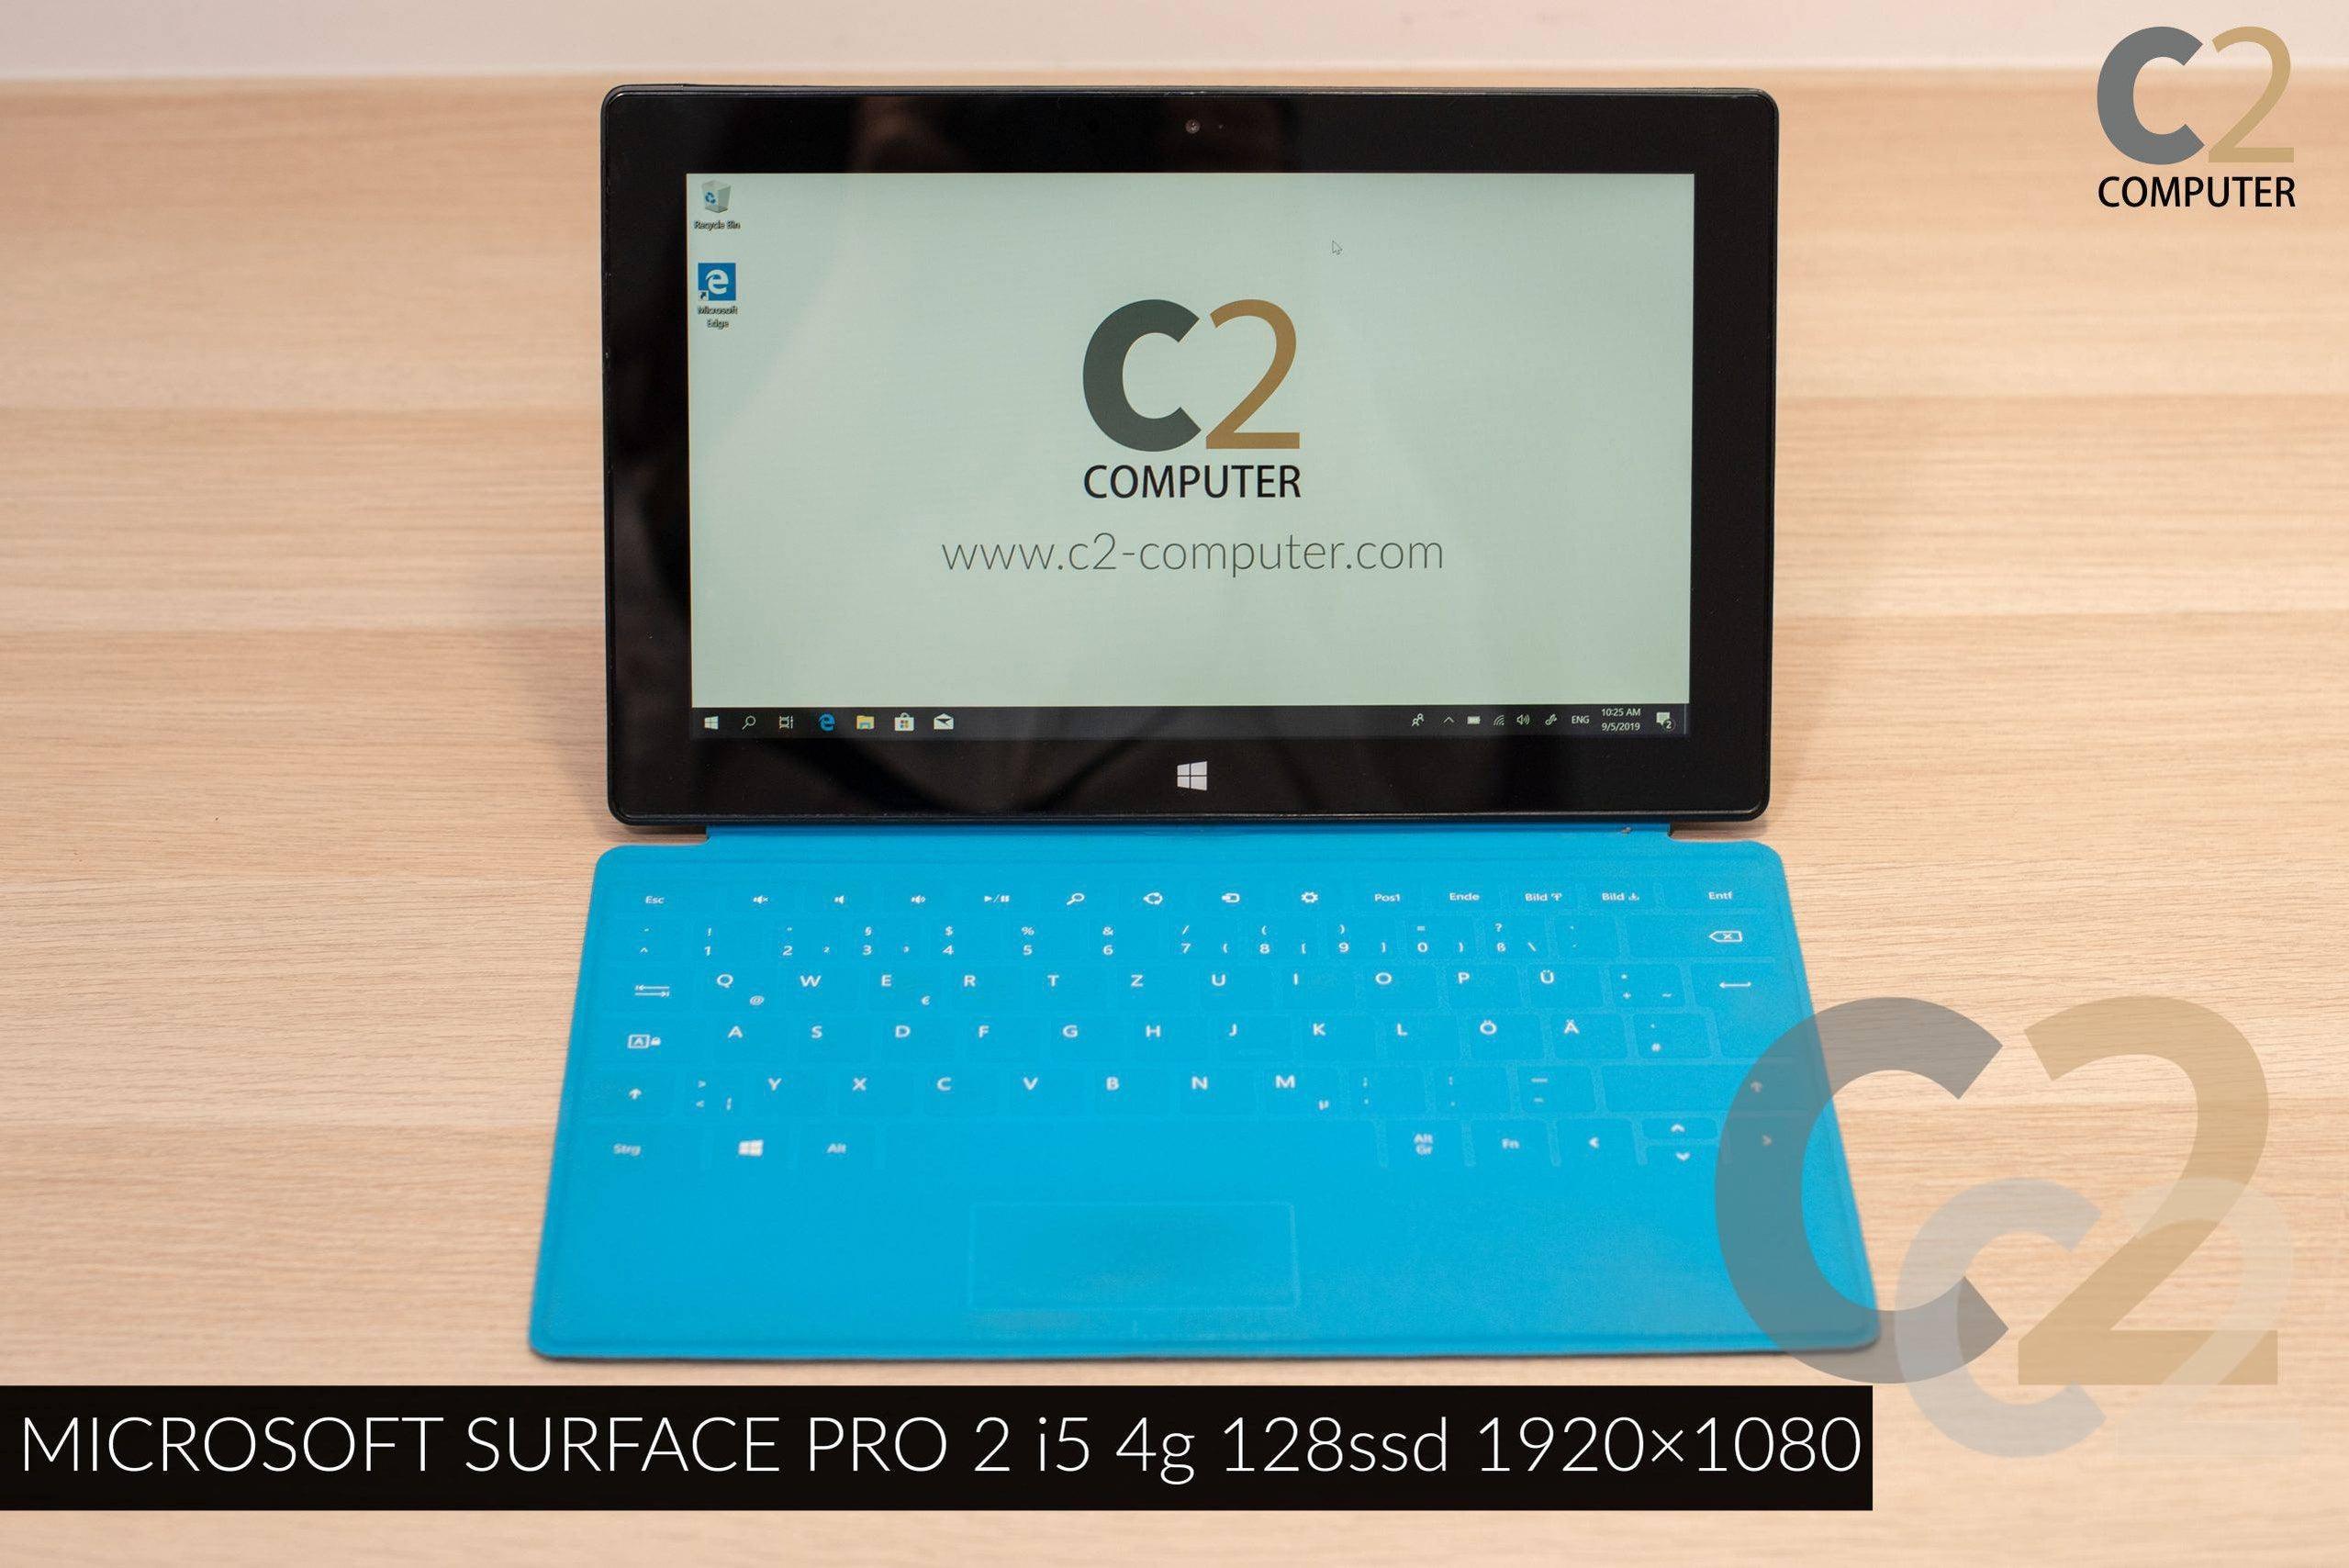 （特價一台） MICROSOFT SURFACE PRO 2 i5 4g 128ssd 2 in 1 Ultrabook 連 keyboard 95%NEW MICROSOFT